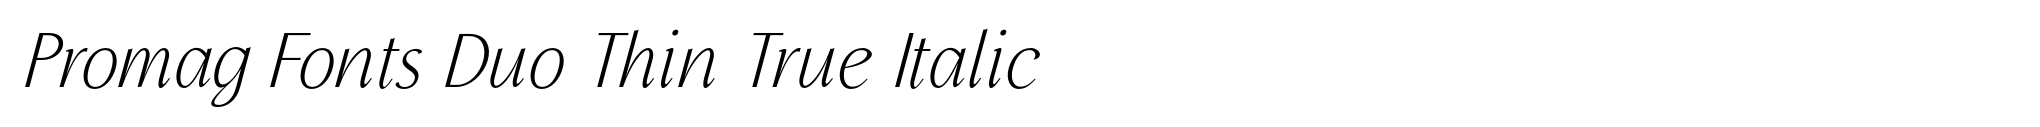 Promag Fonts Duo Thin True Italic image